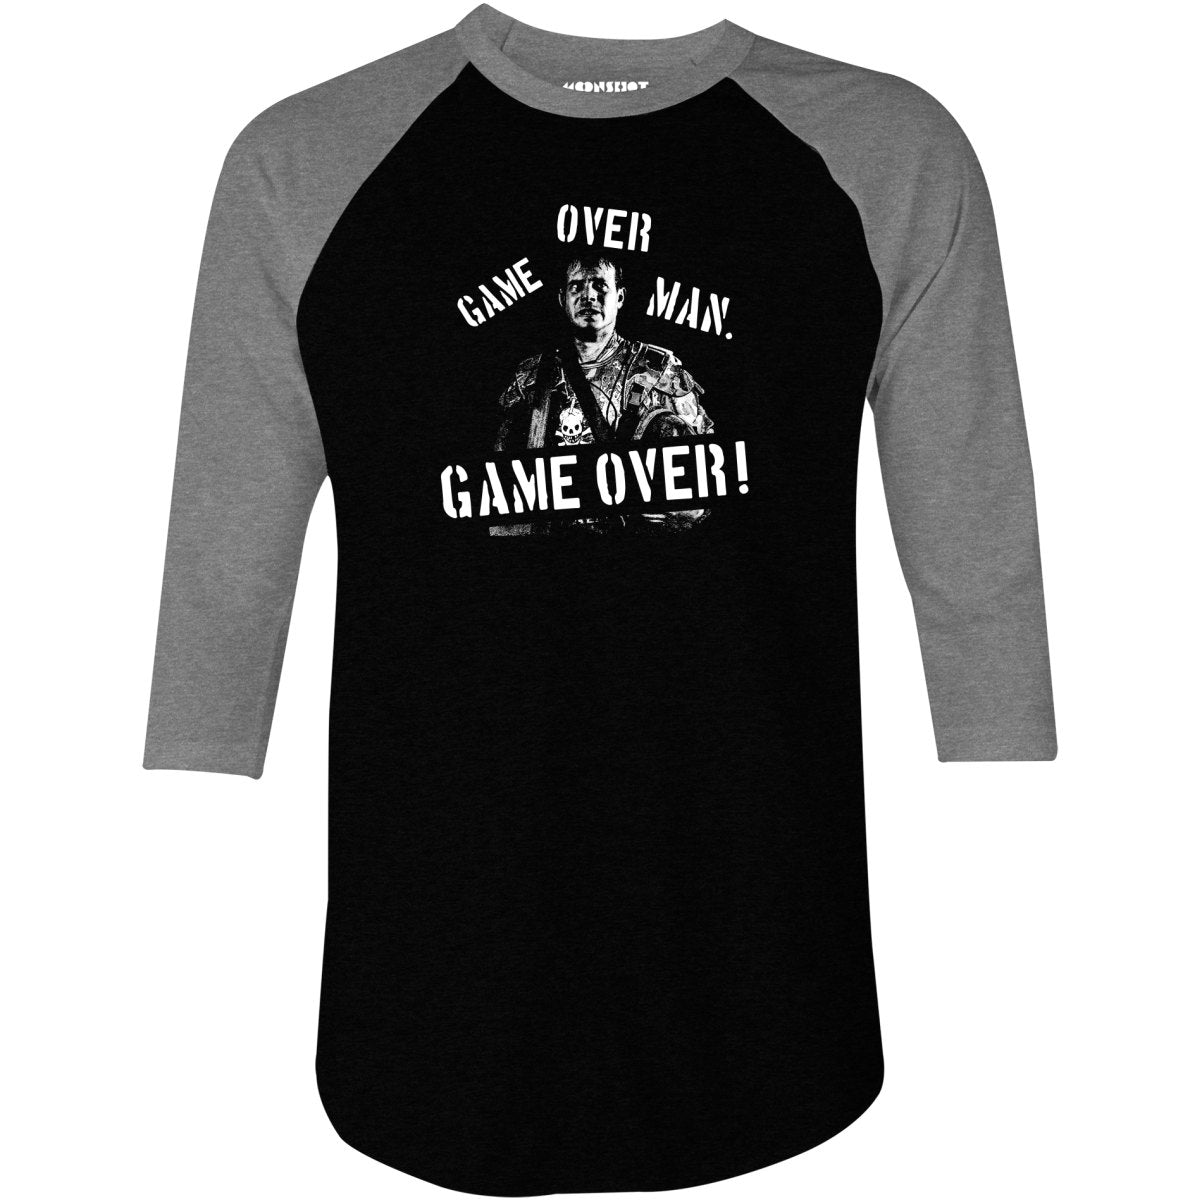 Game Over, Man Game Over! - 3/4 Sleeve Raglan T-Shirt